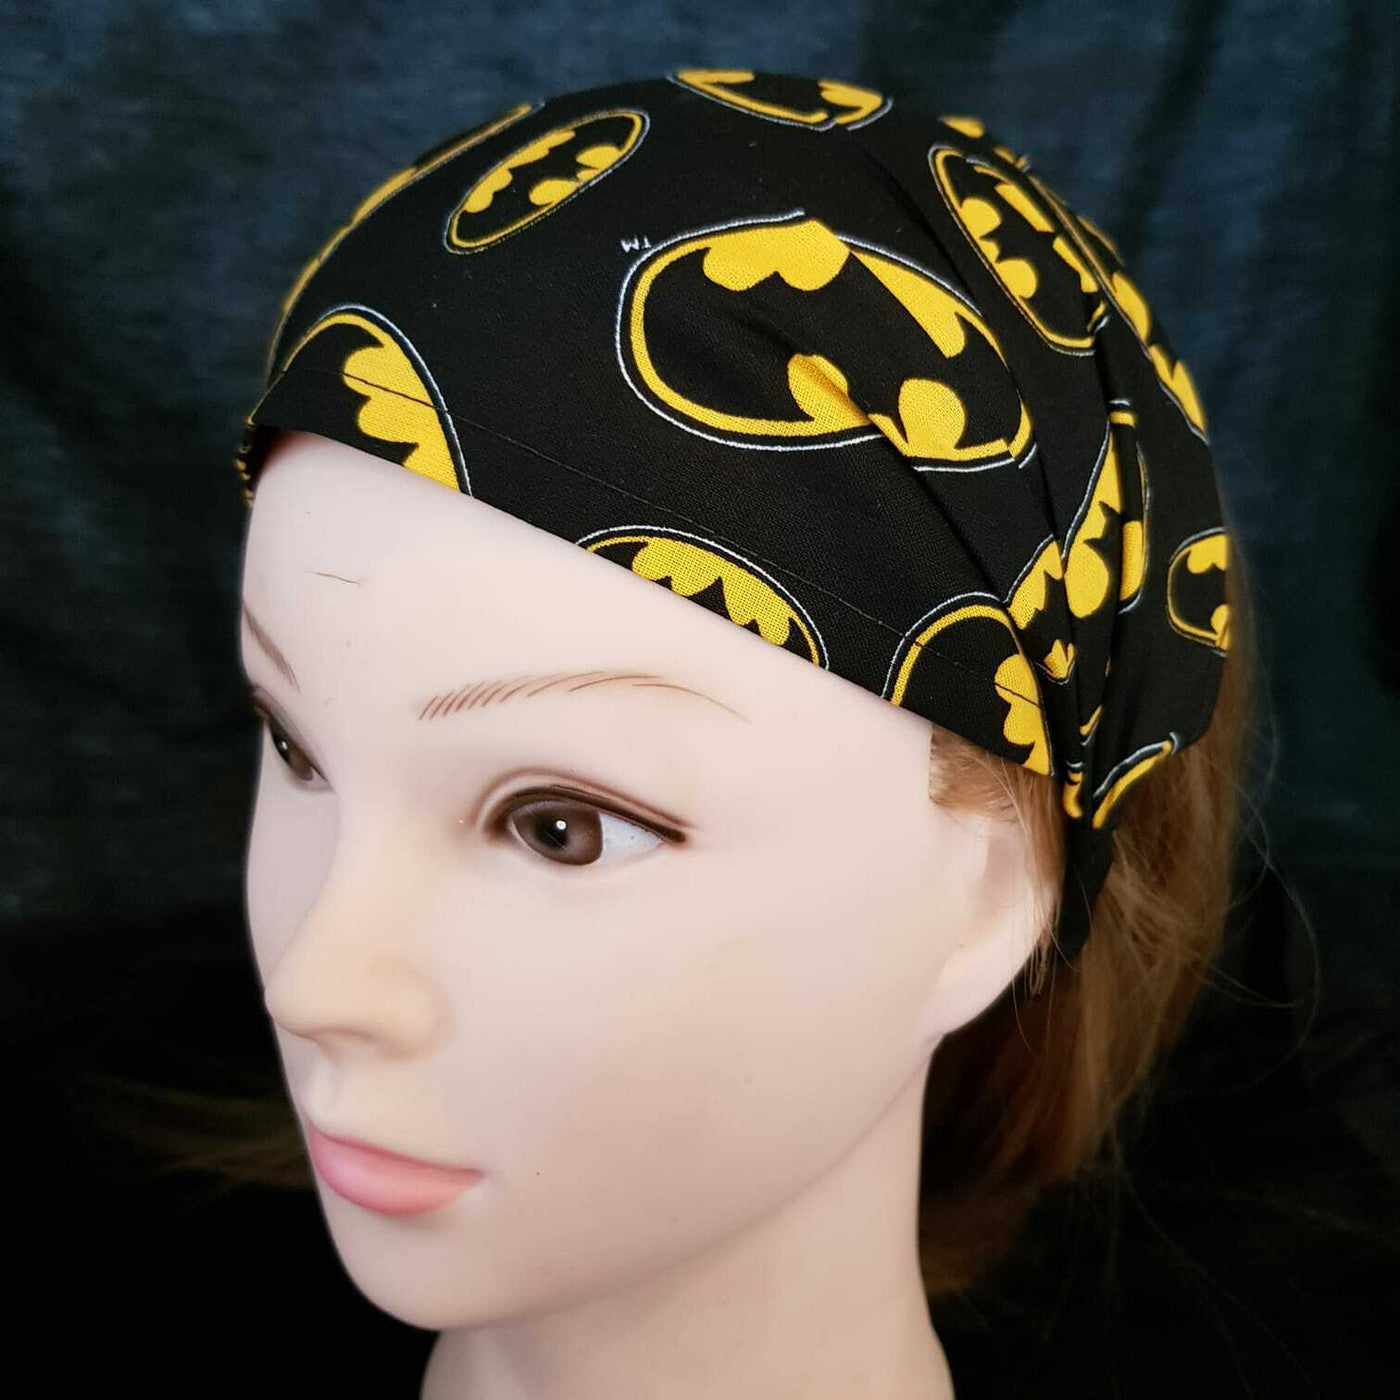 Official Batman logo elasticated headband